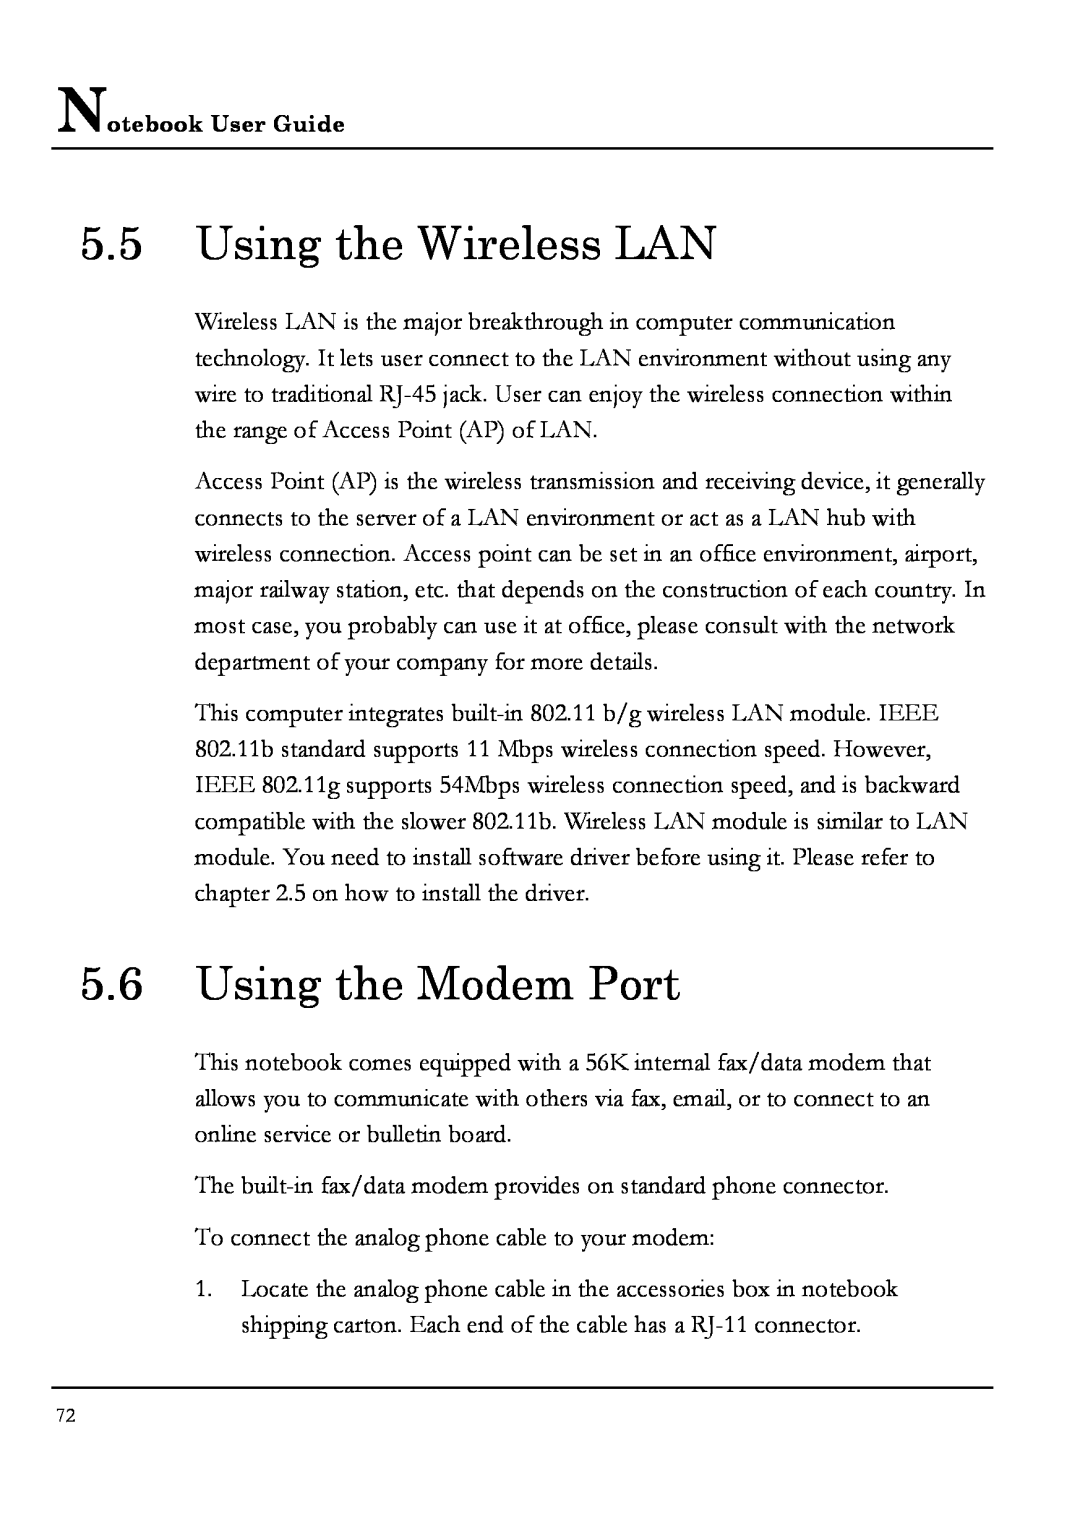 Everex NM4100W, NM3700W, NM3500W, NM3900W manual Using the Wireless LAN, Using the Modem Port 